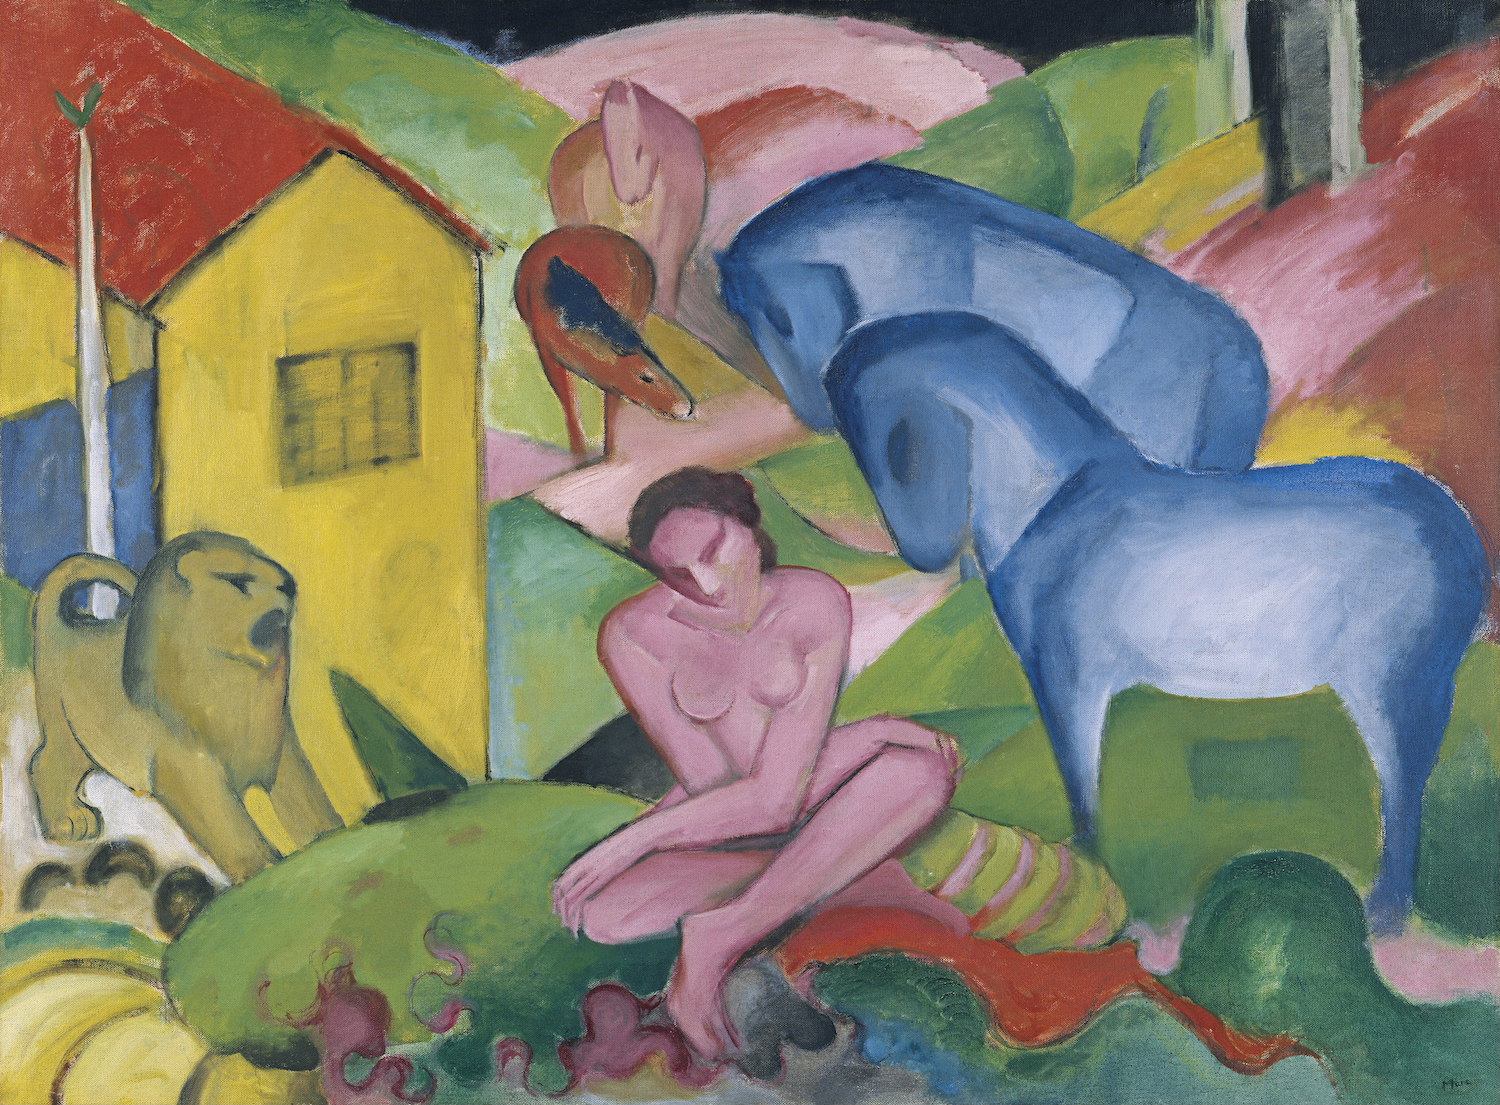 The Dream by Franz Marc - 1912 - 135 x 100.5 cm Museo Nacional Thyssen-Bornemisza